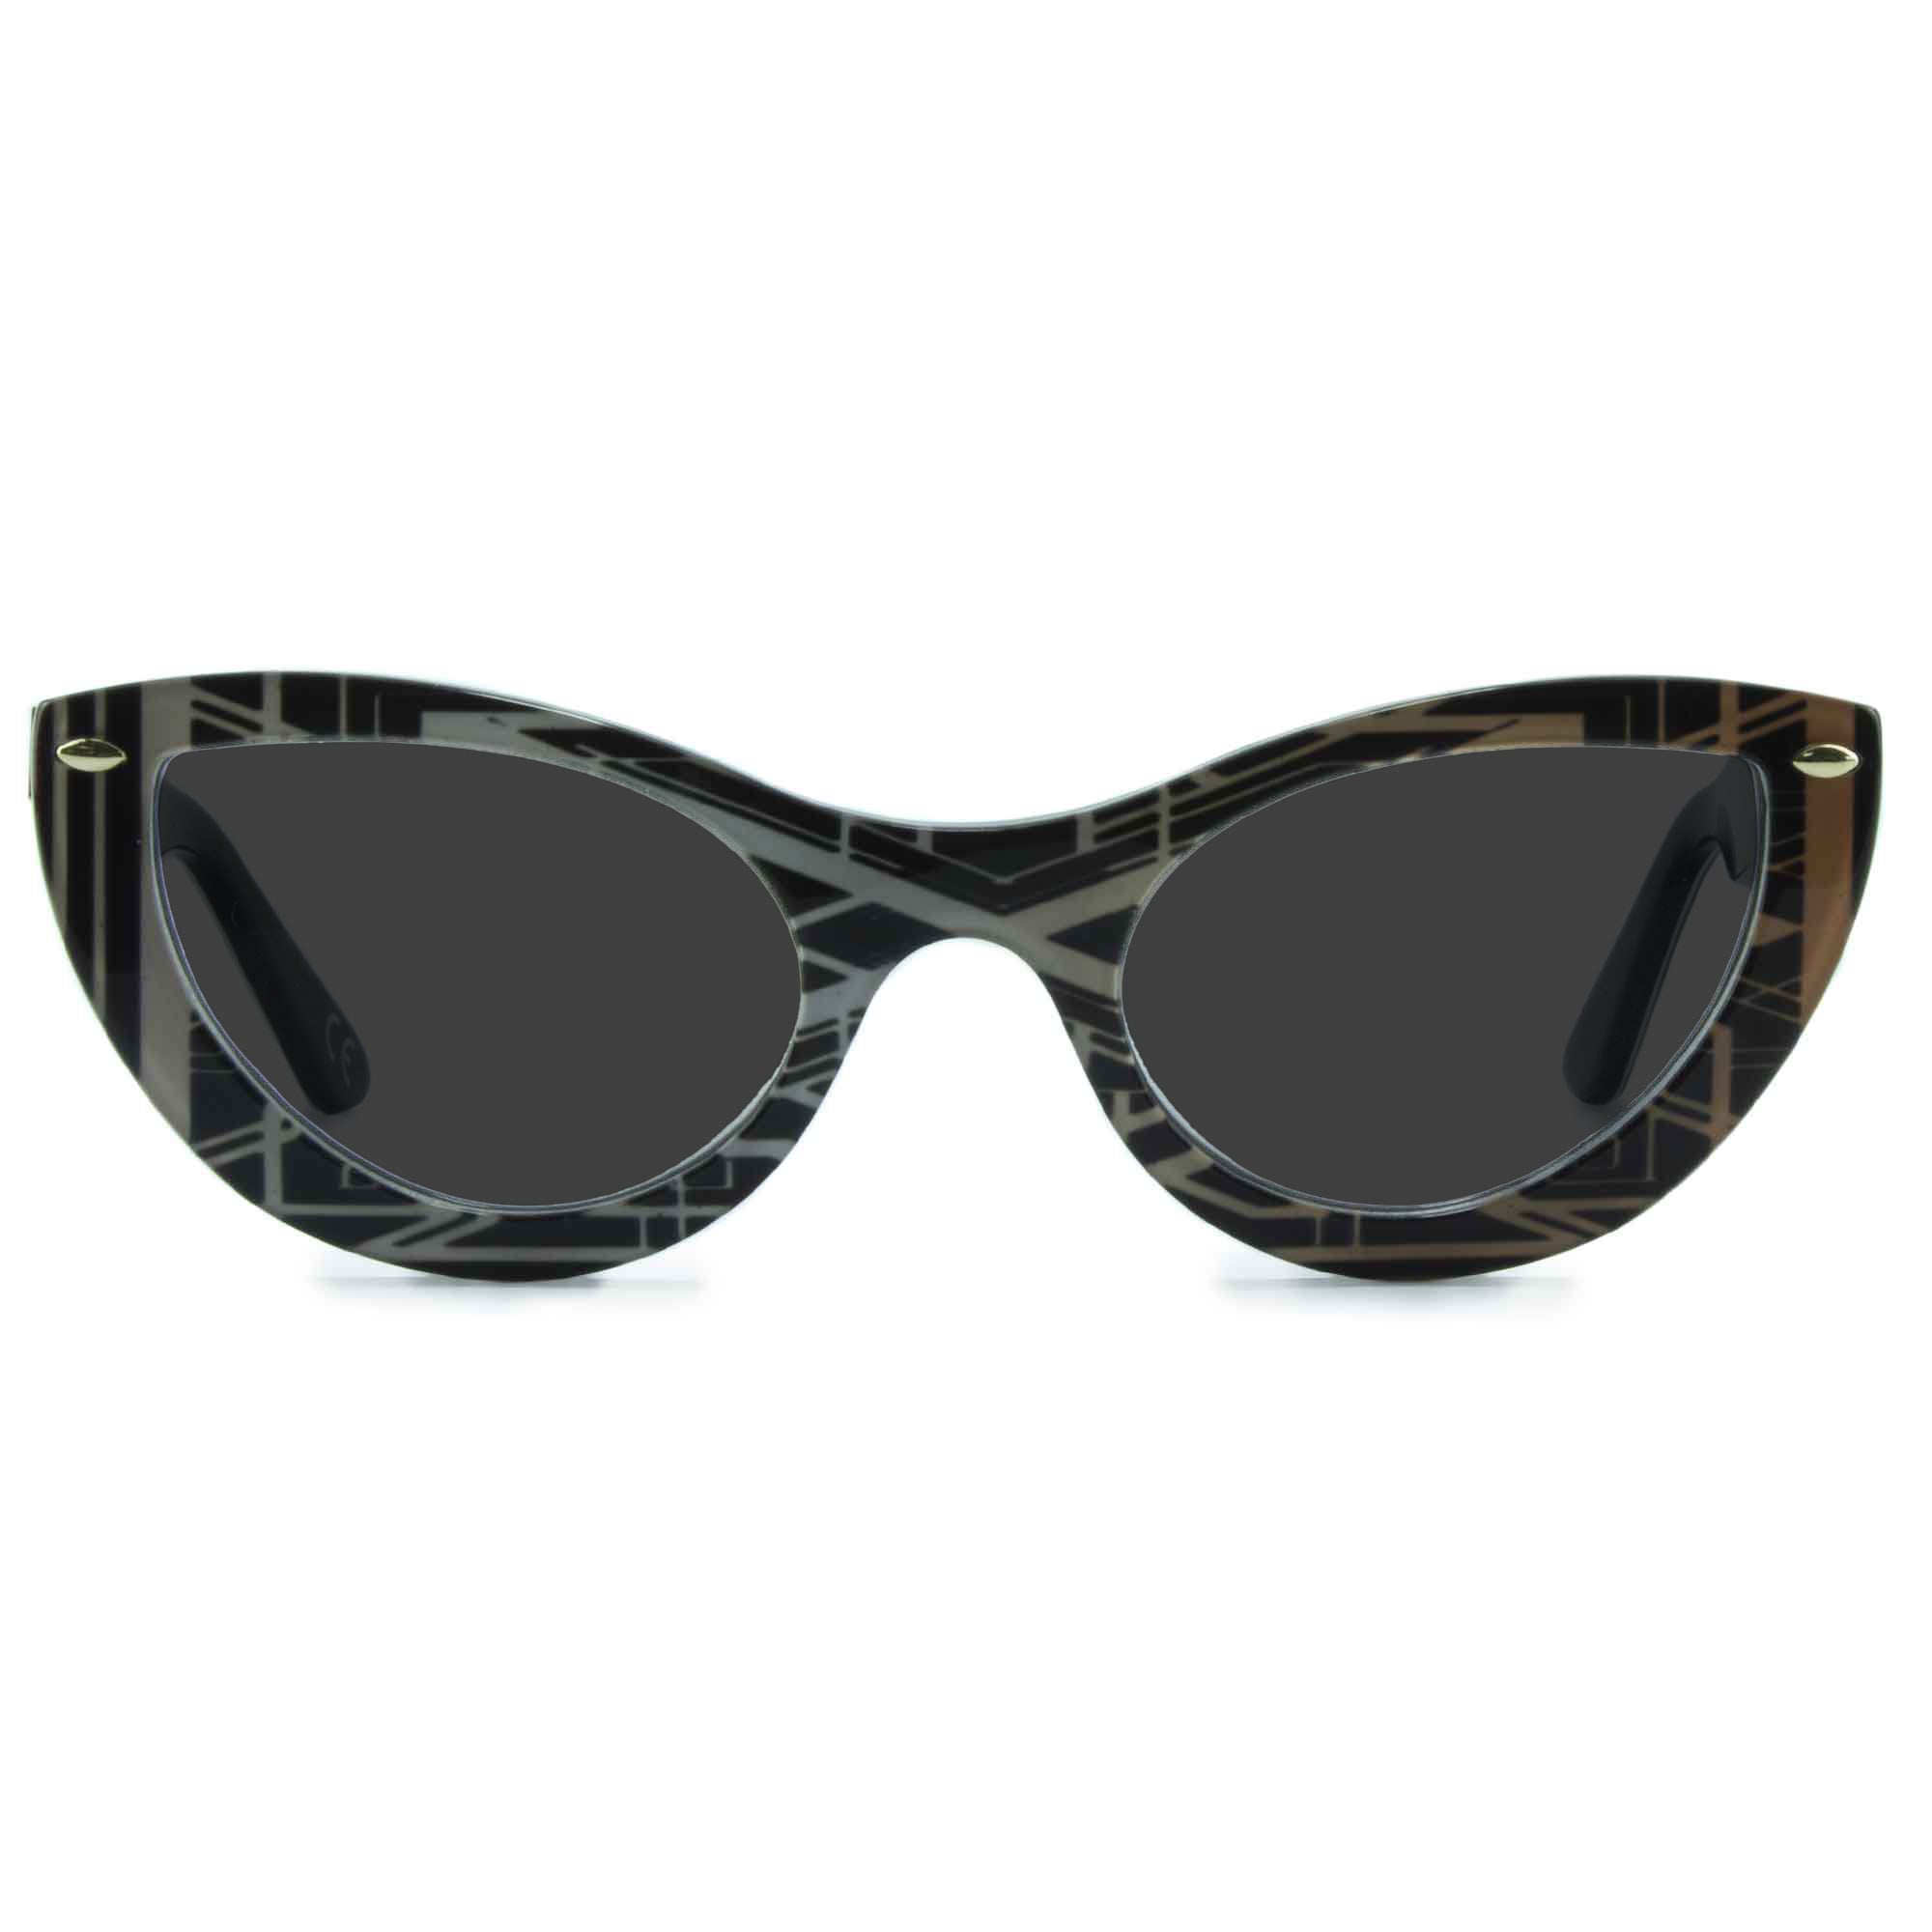 black & gold cat eye sunglasses